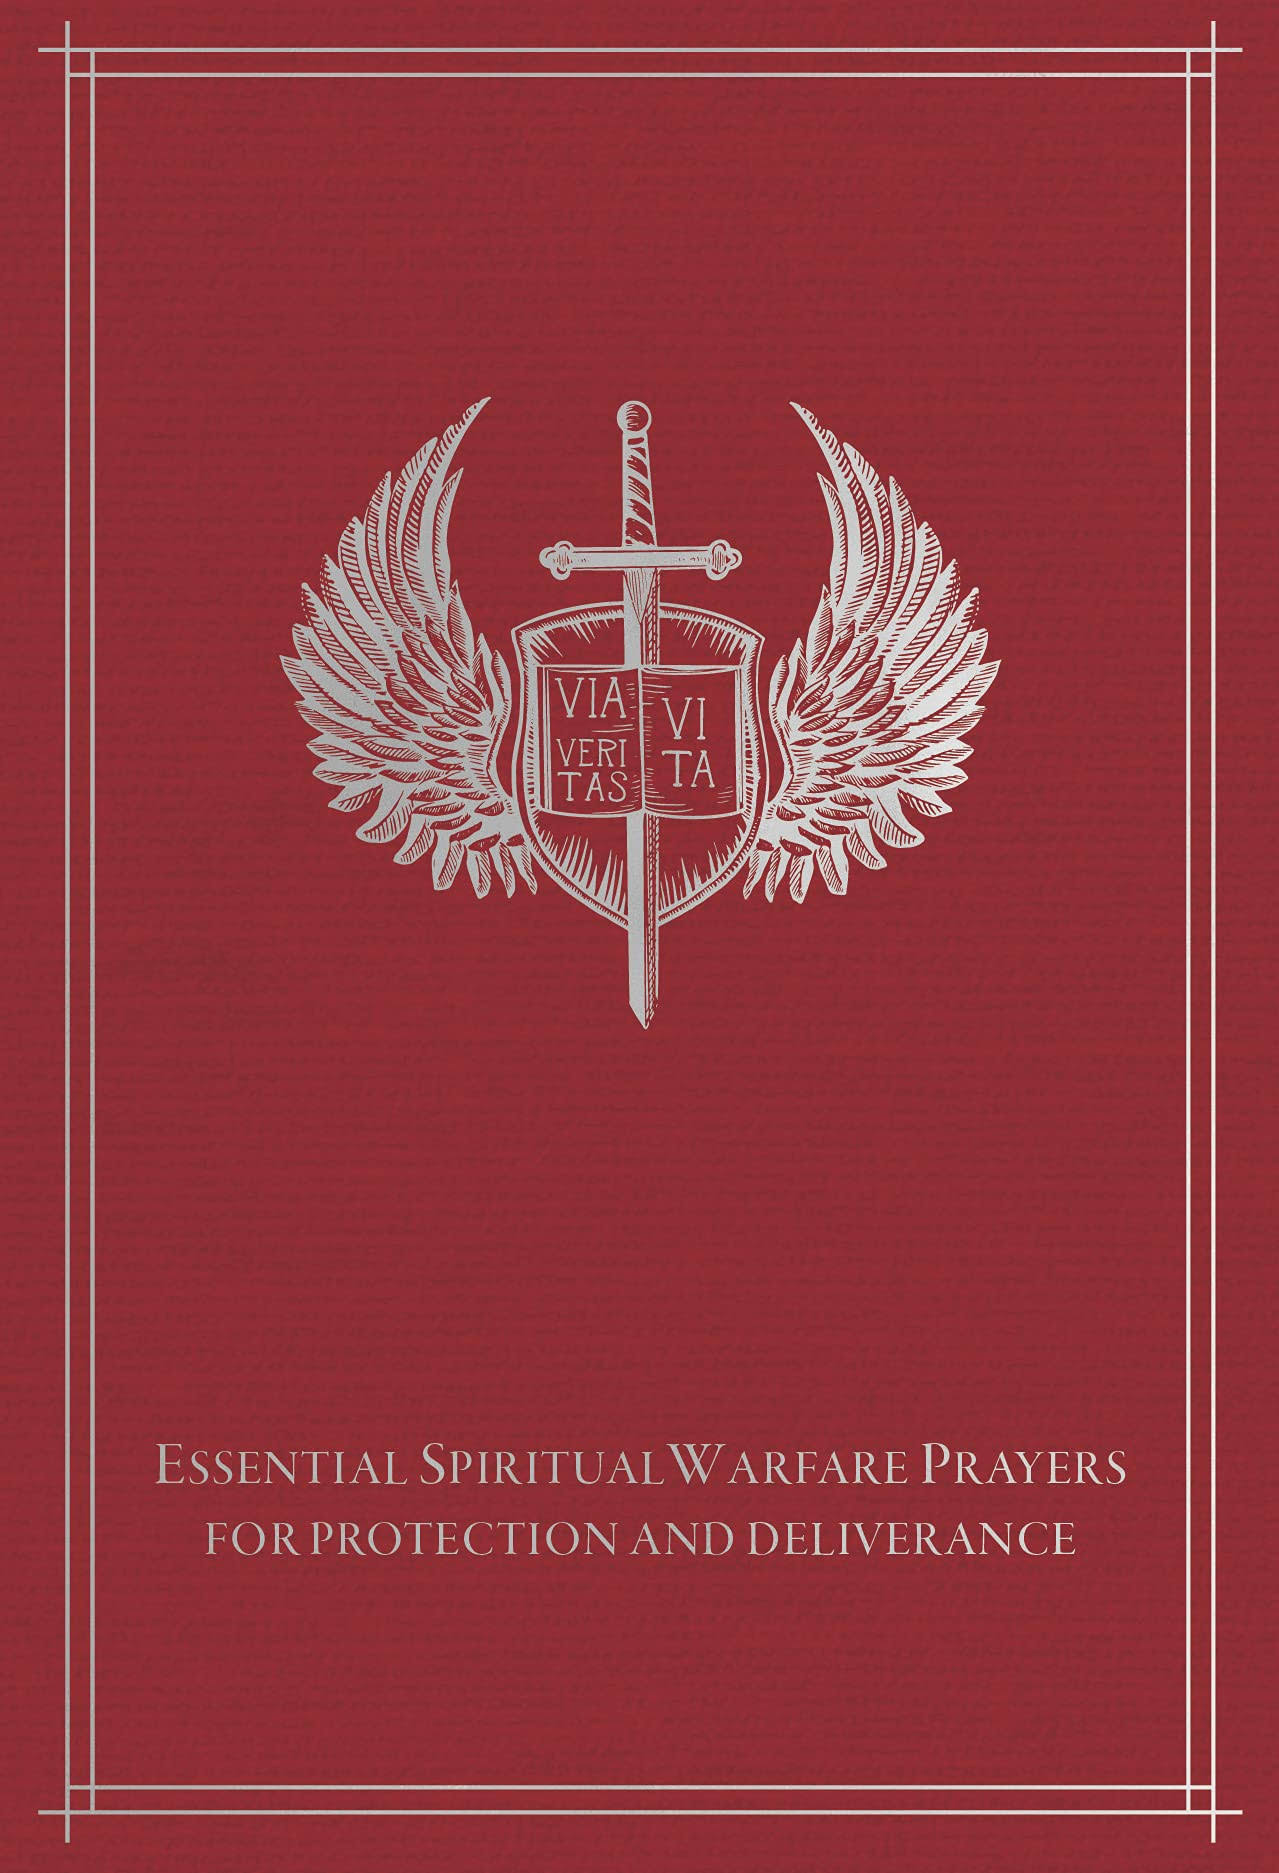 Essential Spiritual Warfare Prayers [Book]